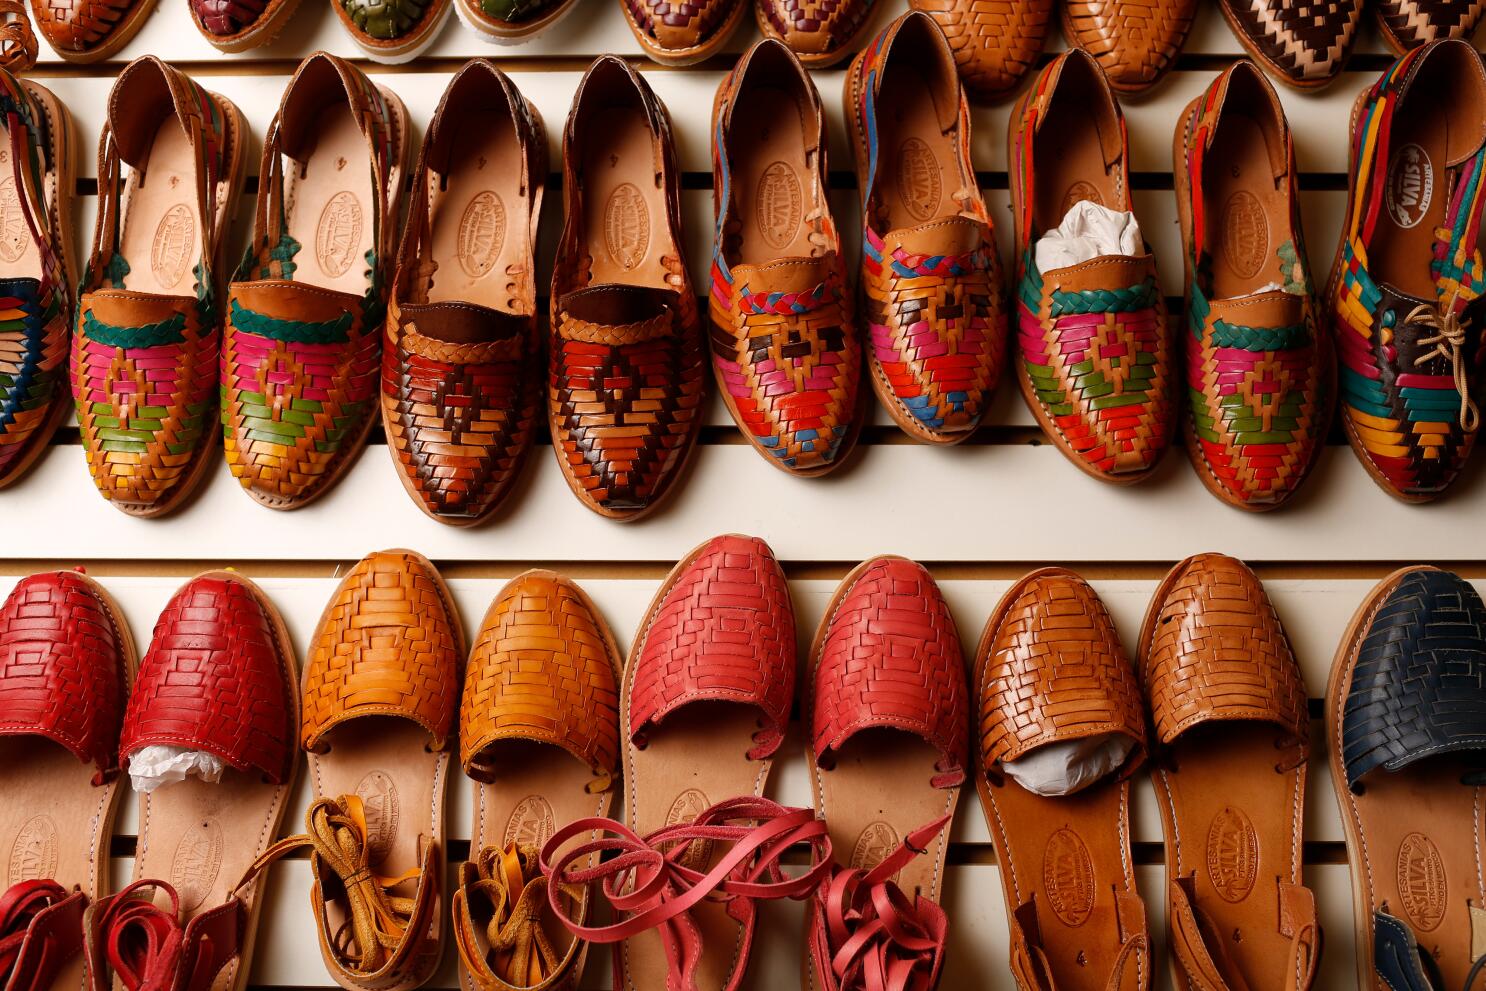 Louis Vuitton 2015 Sandalias - Zapatos / Shoes - Sandals - Fashion